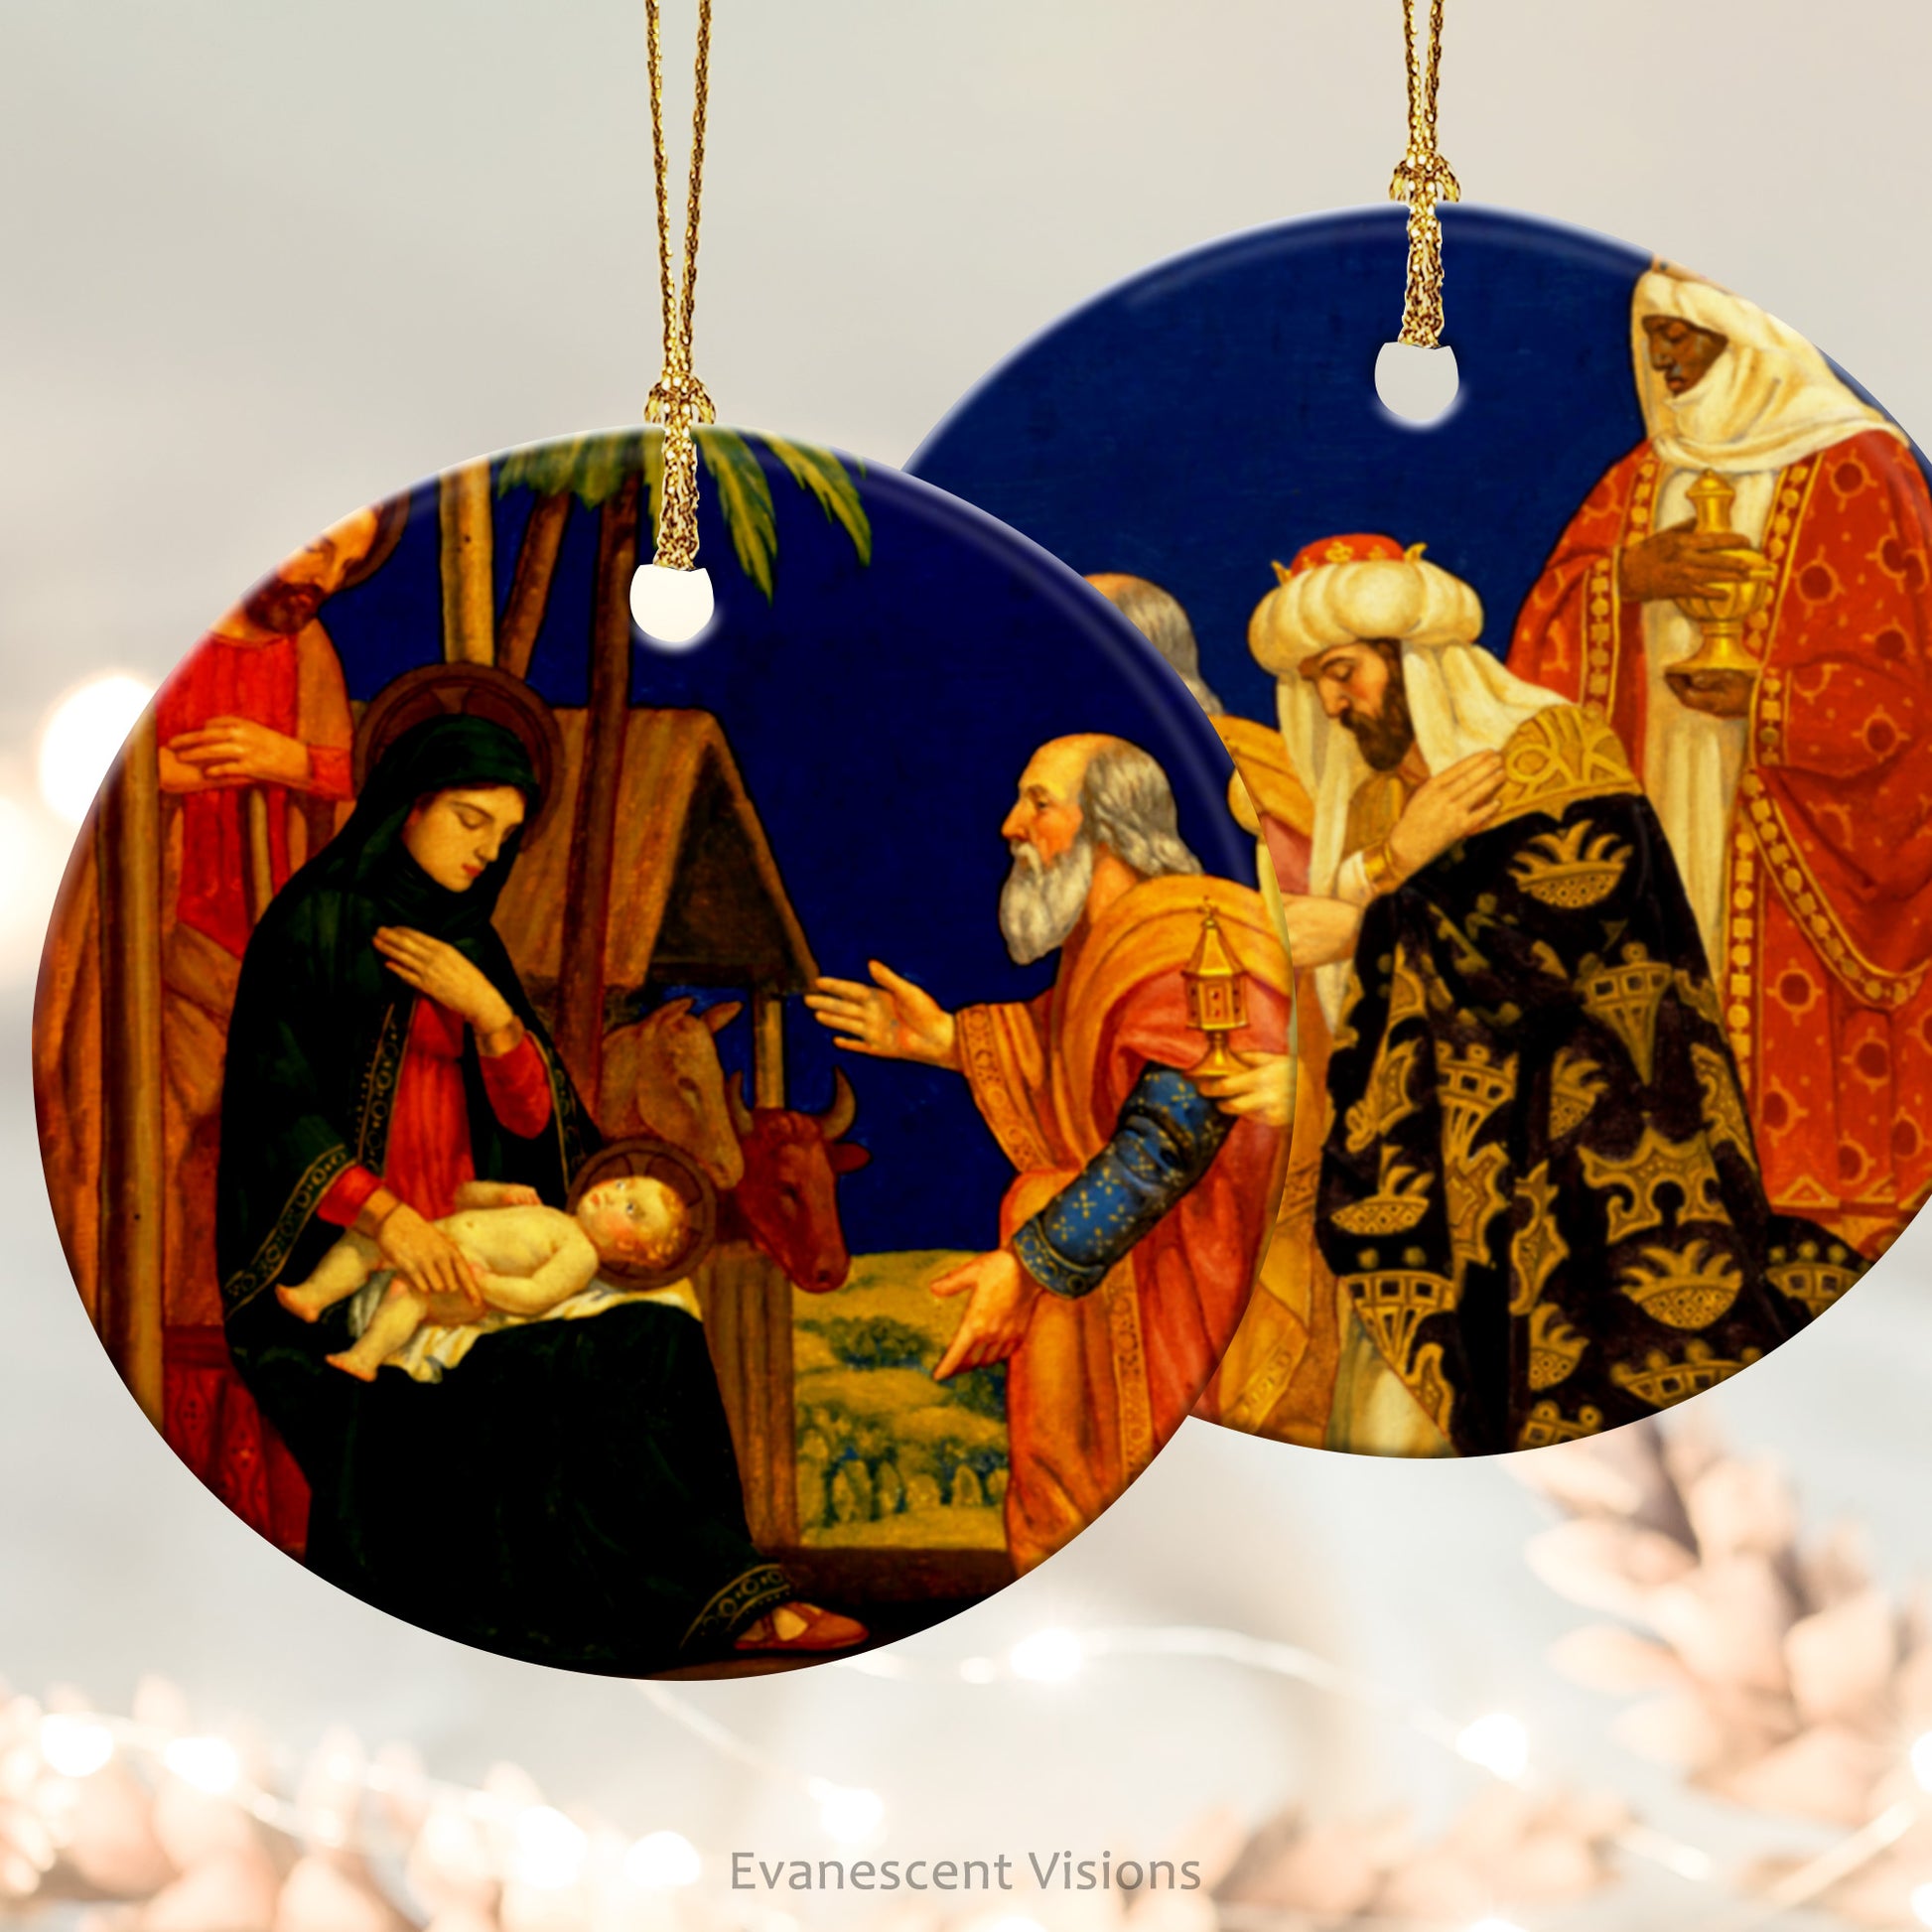 Ceramic Christmas Ornaments with a colourful Nativity Scene design